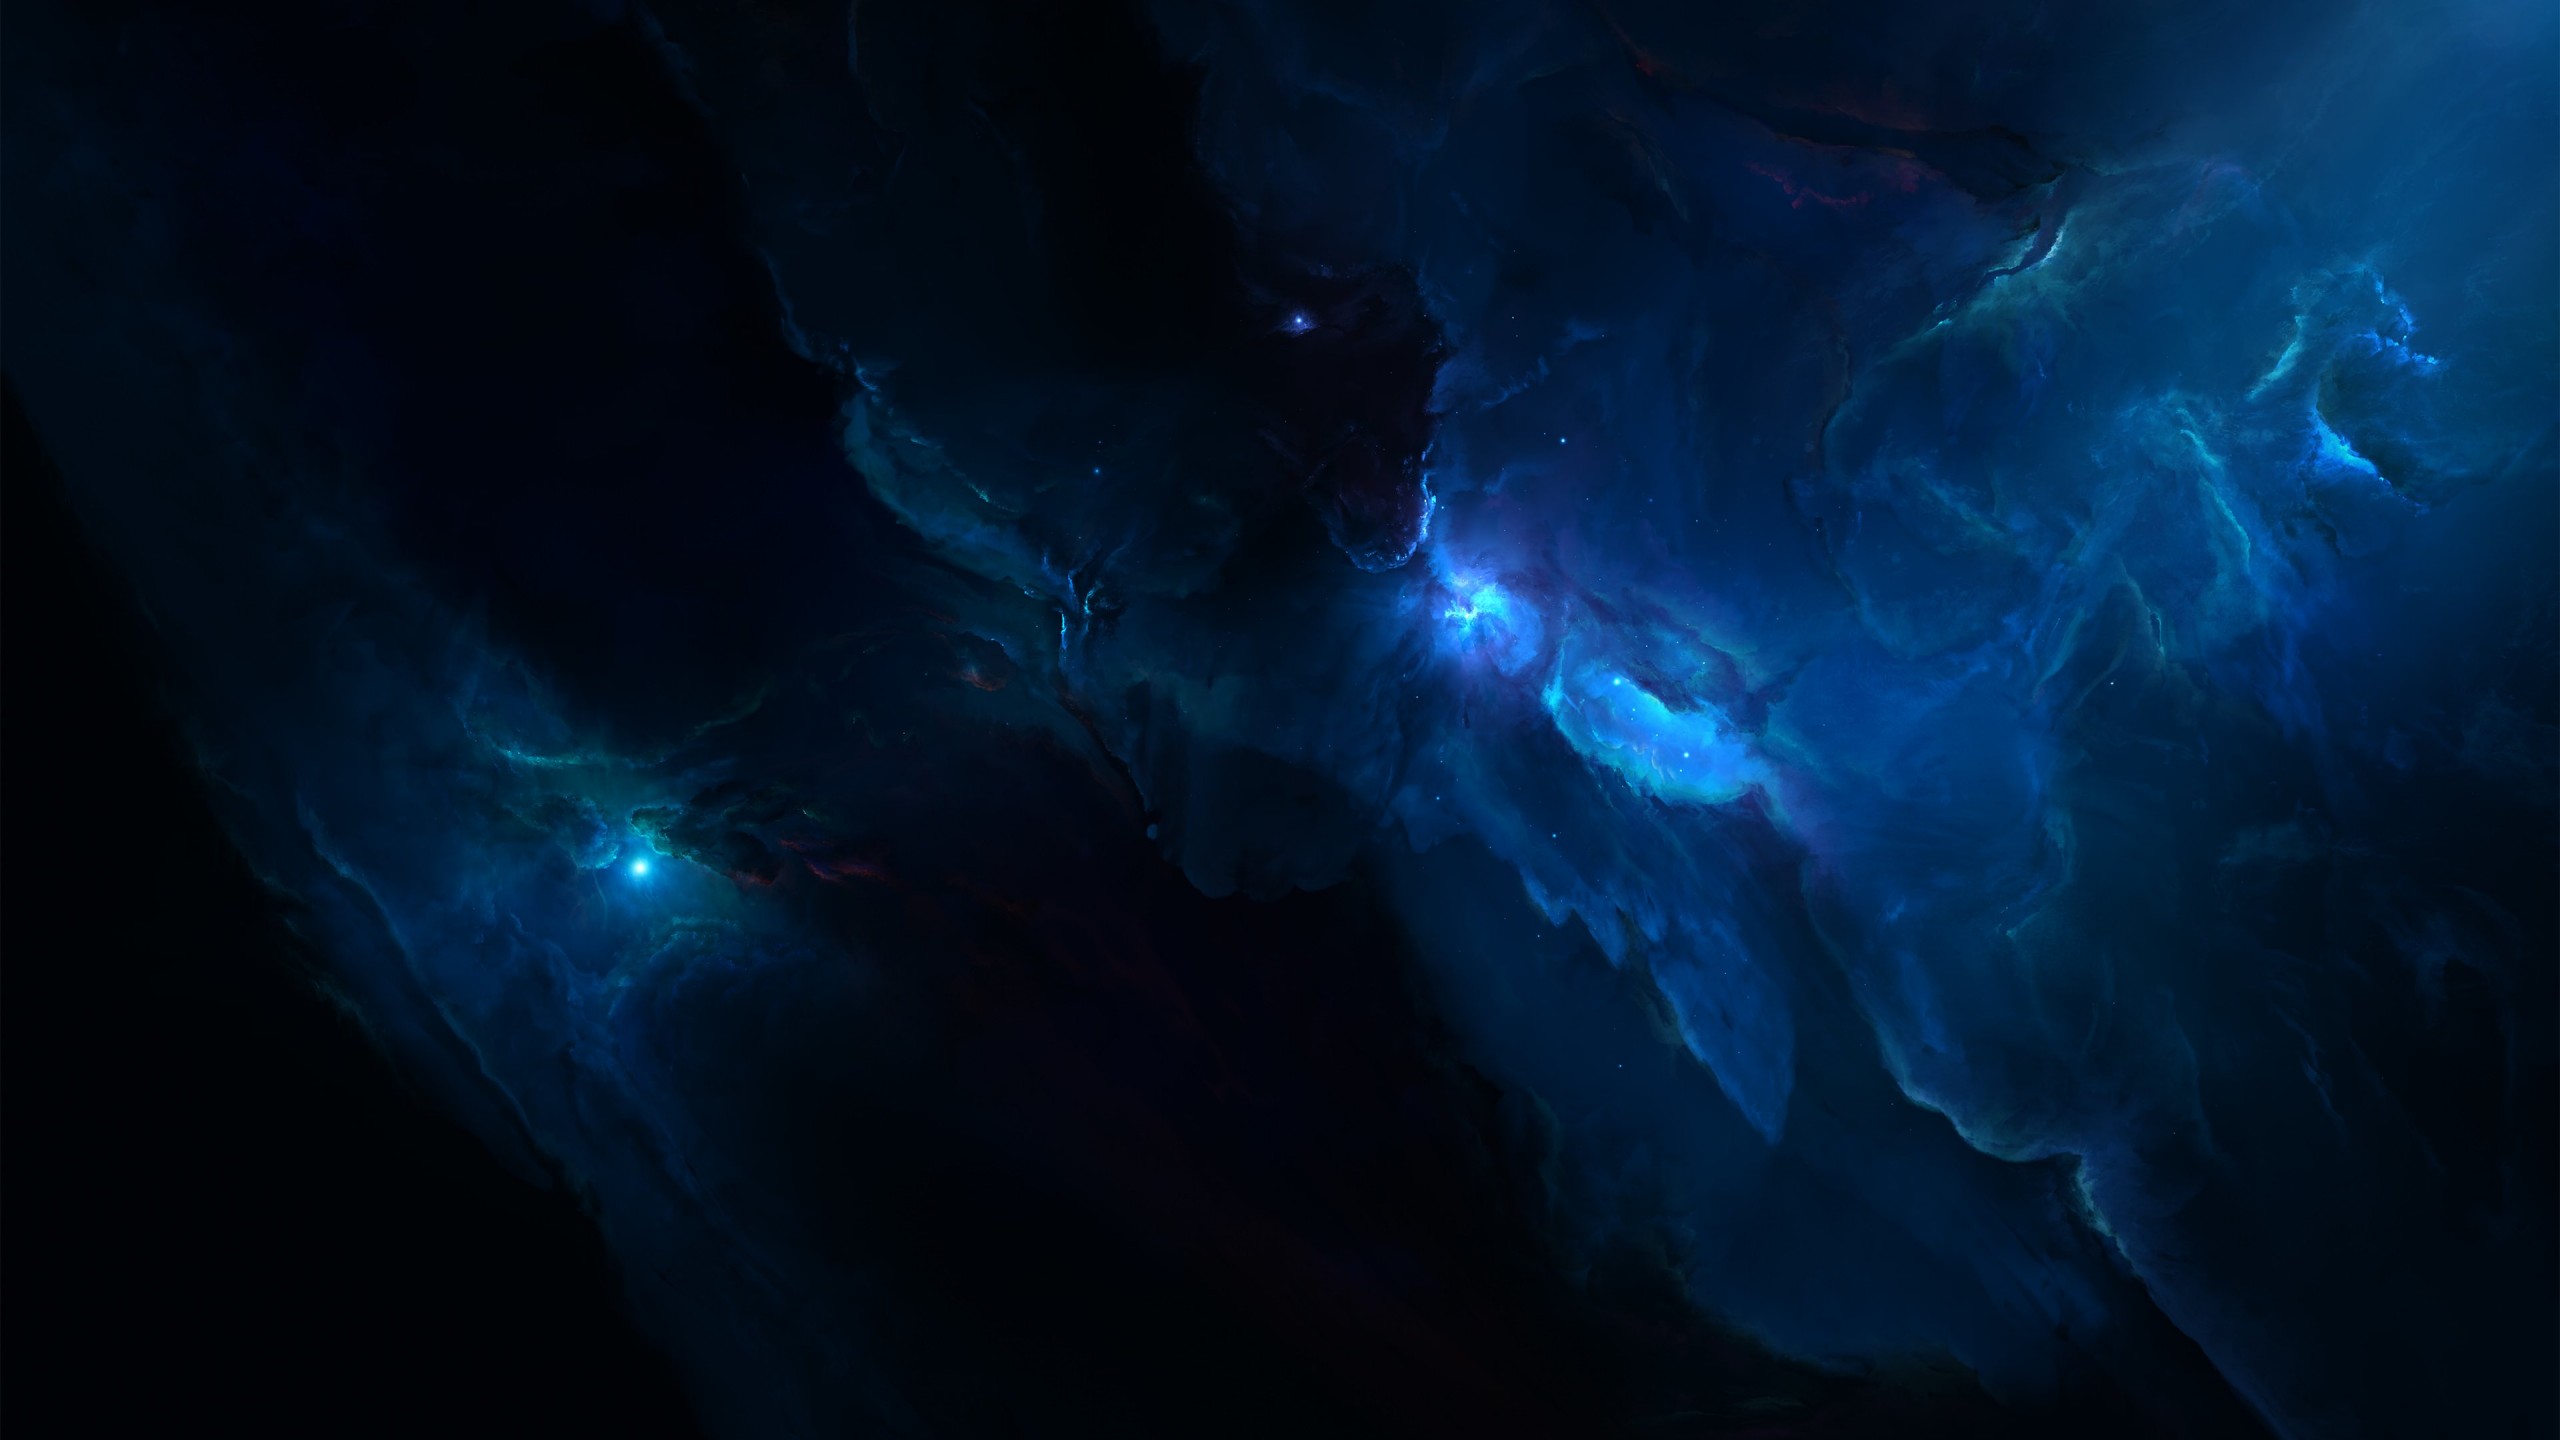 Atlantis Labyrinth Nebula Wallpaper for Desktop 2560x1440